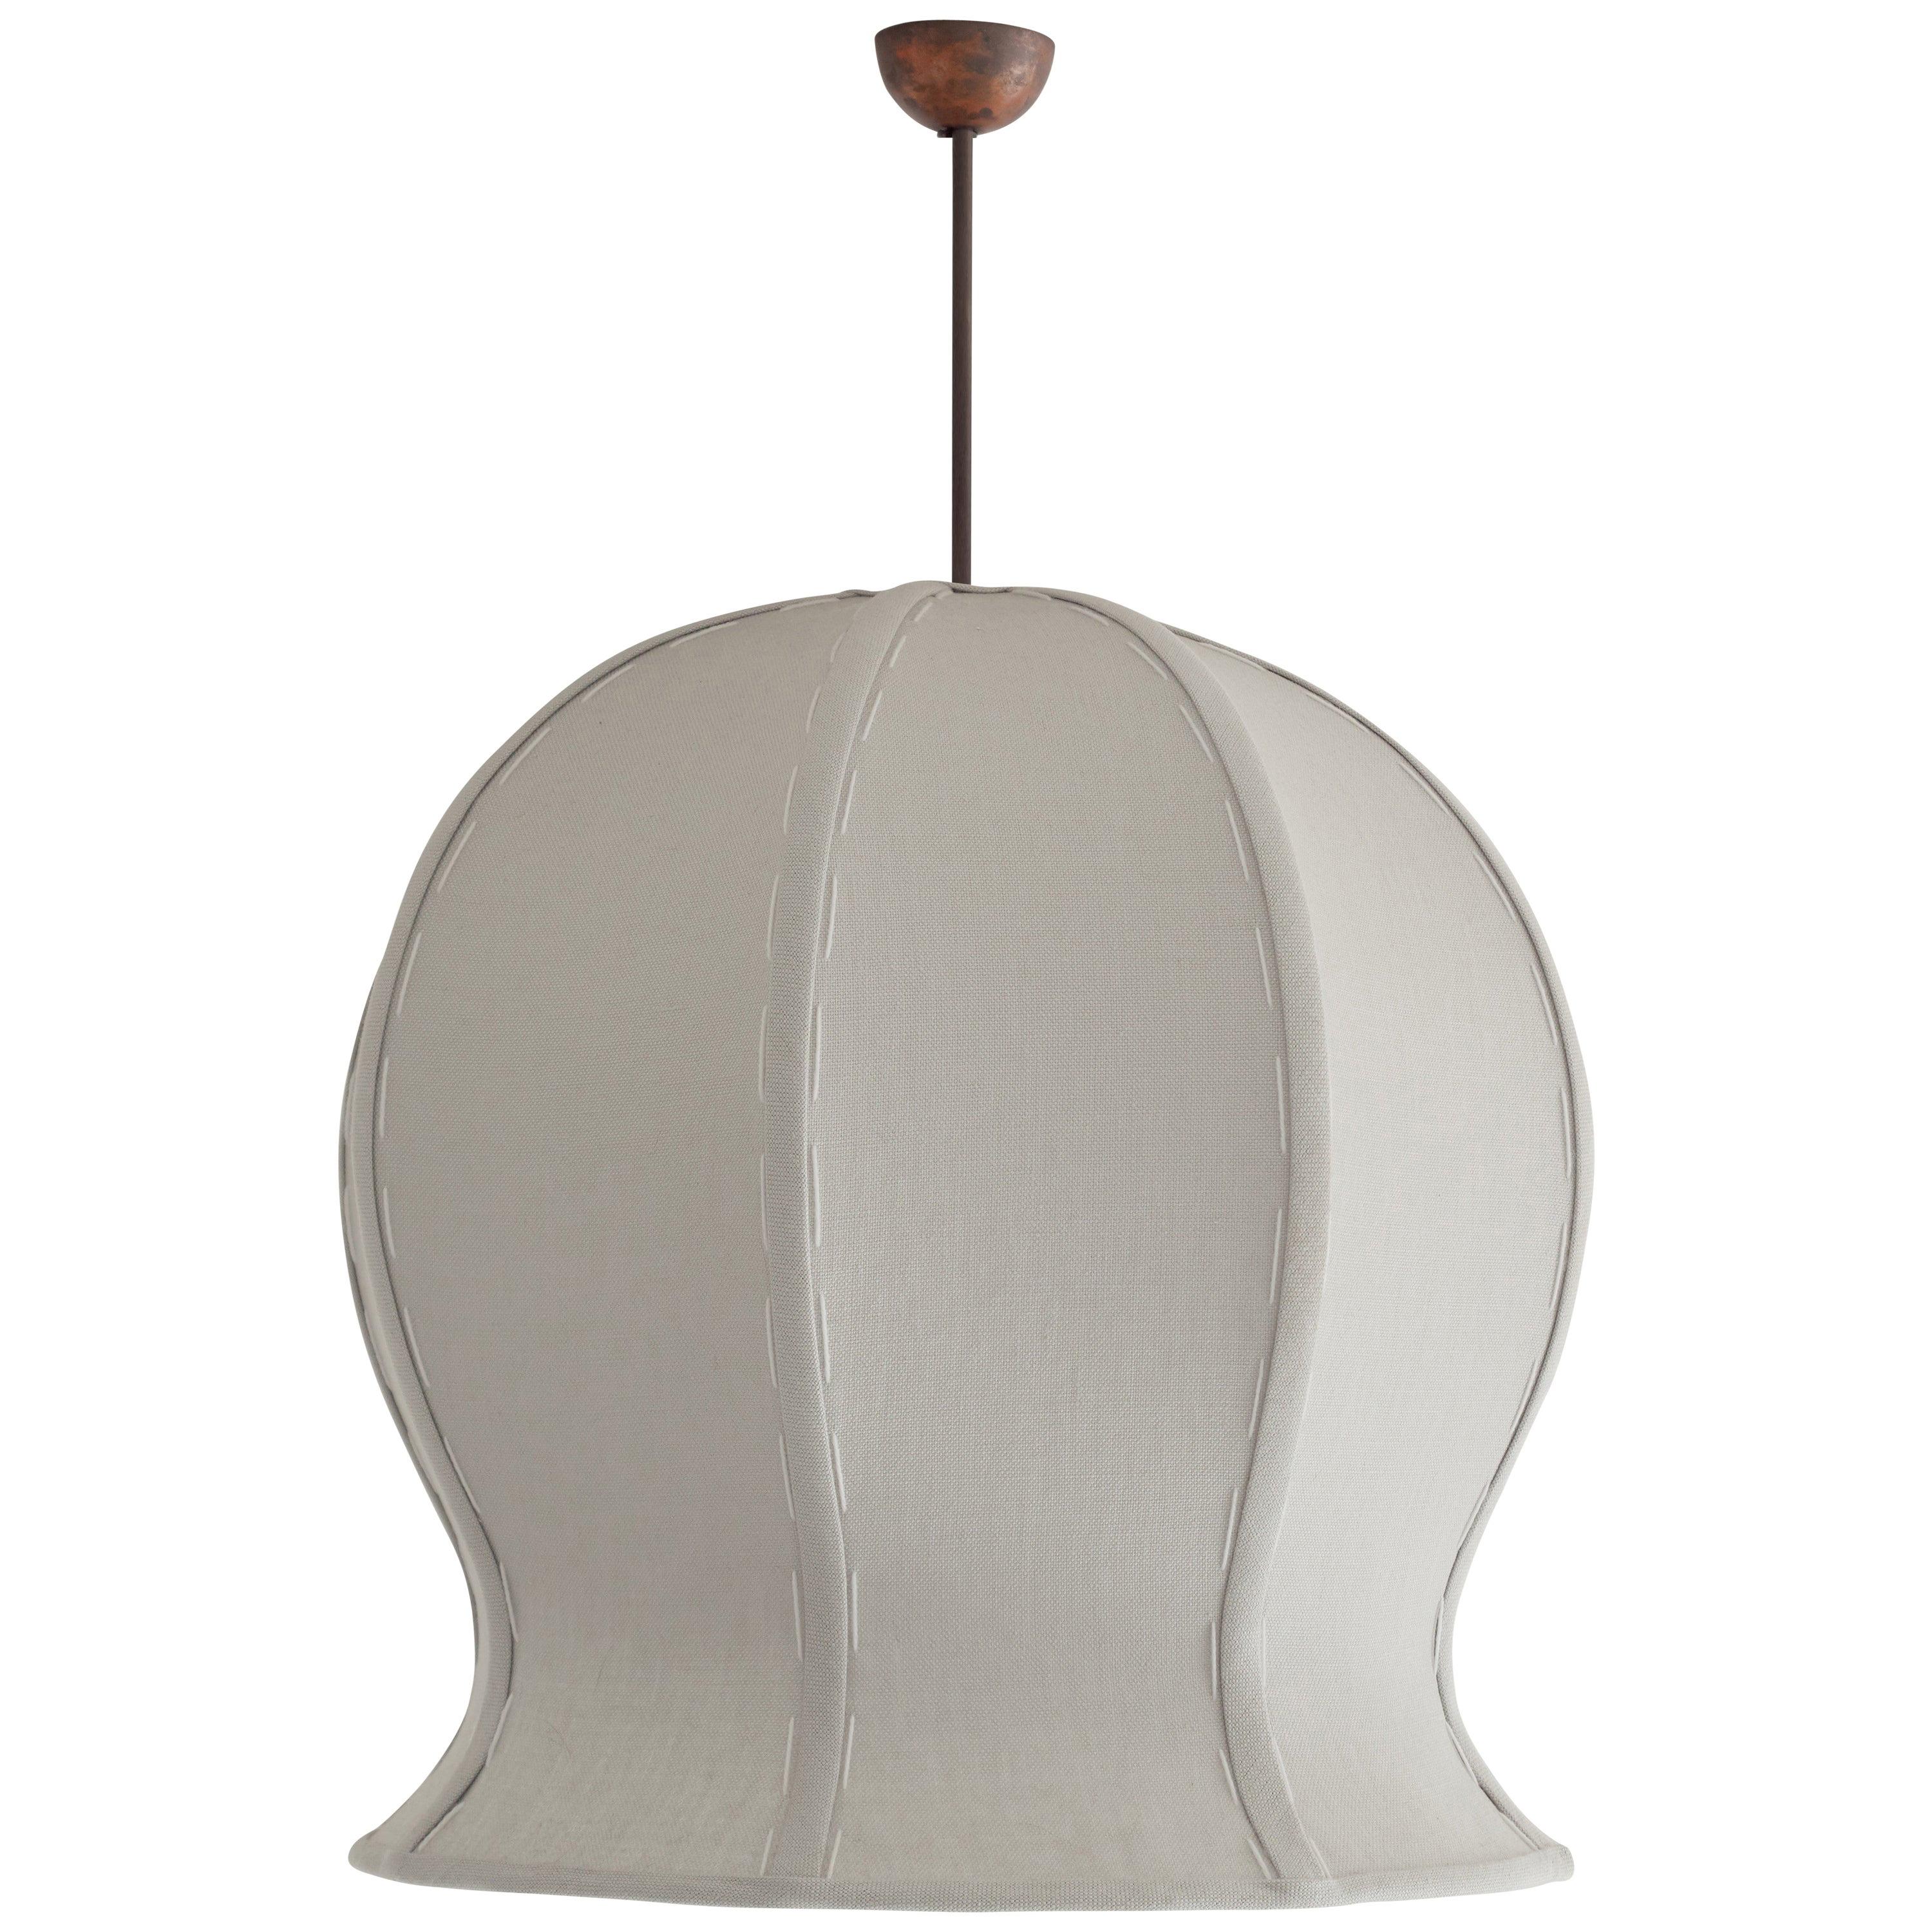 Tulip 520 Pendant by Wende Reid - Organic, Minimal, Artisanal For Sale